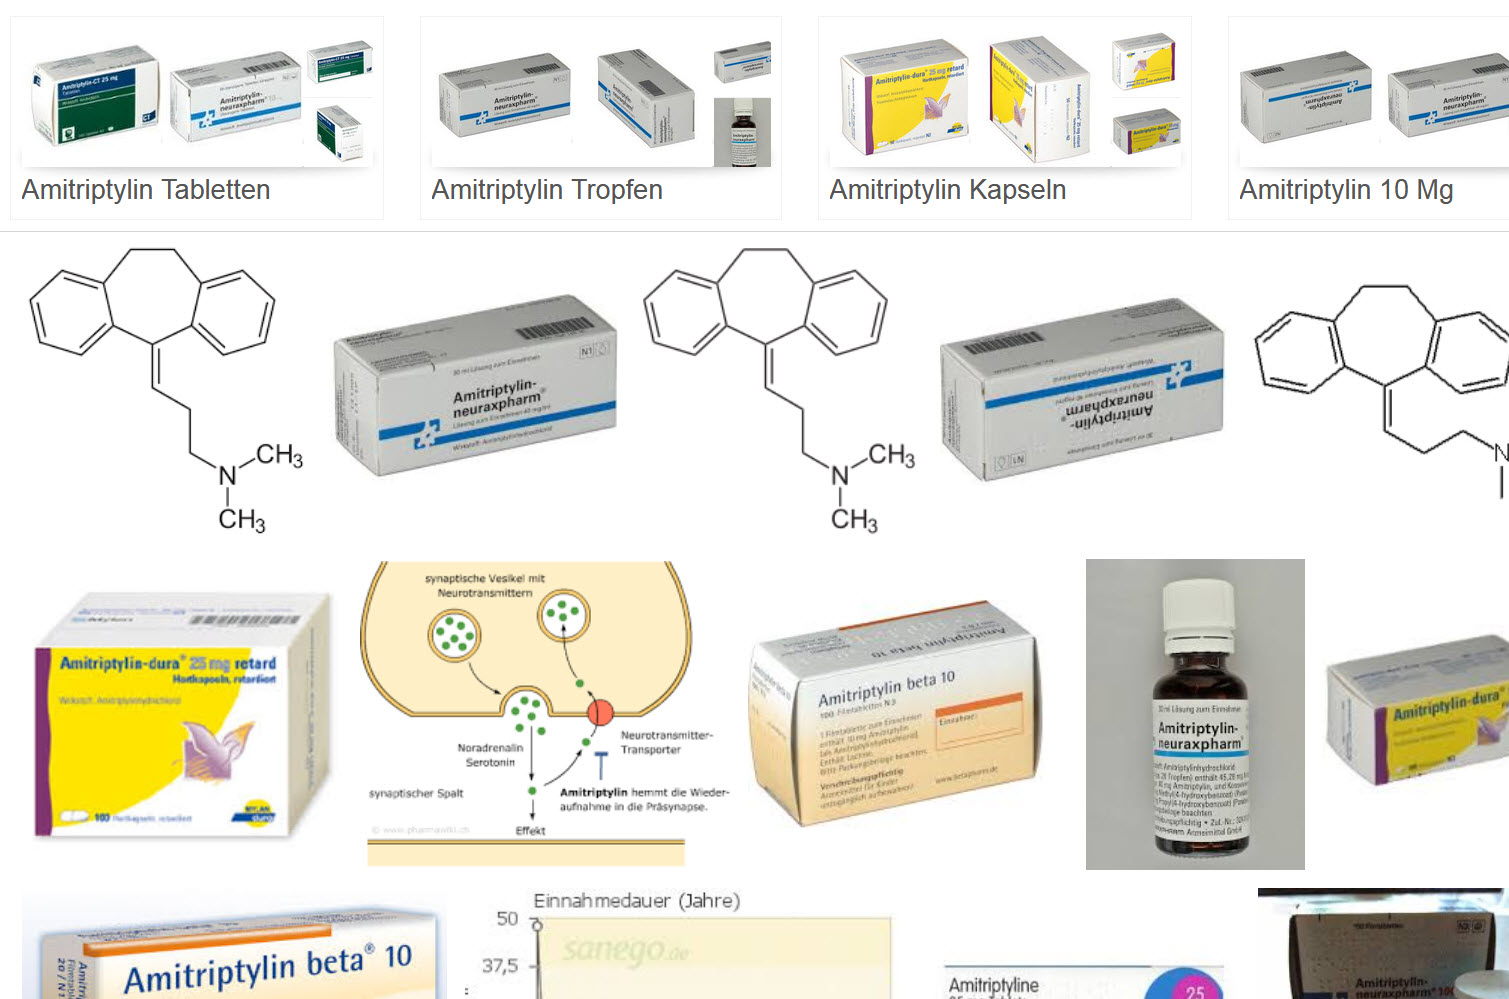 Amitriptylin Tropfen, Tabletten, Kapseln: Neuraxpharm, dura, beta